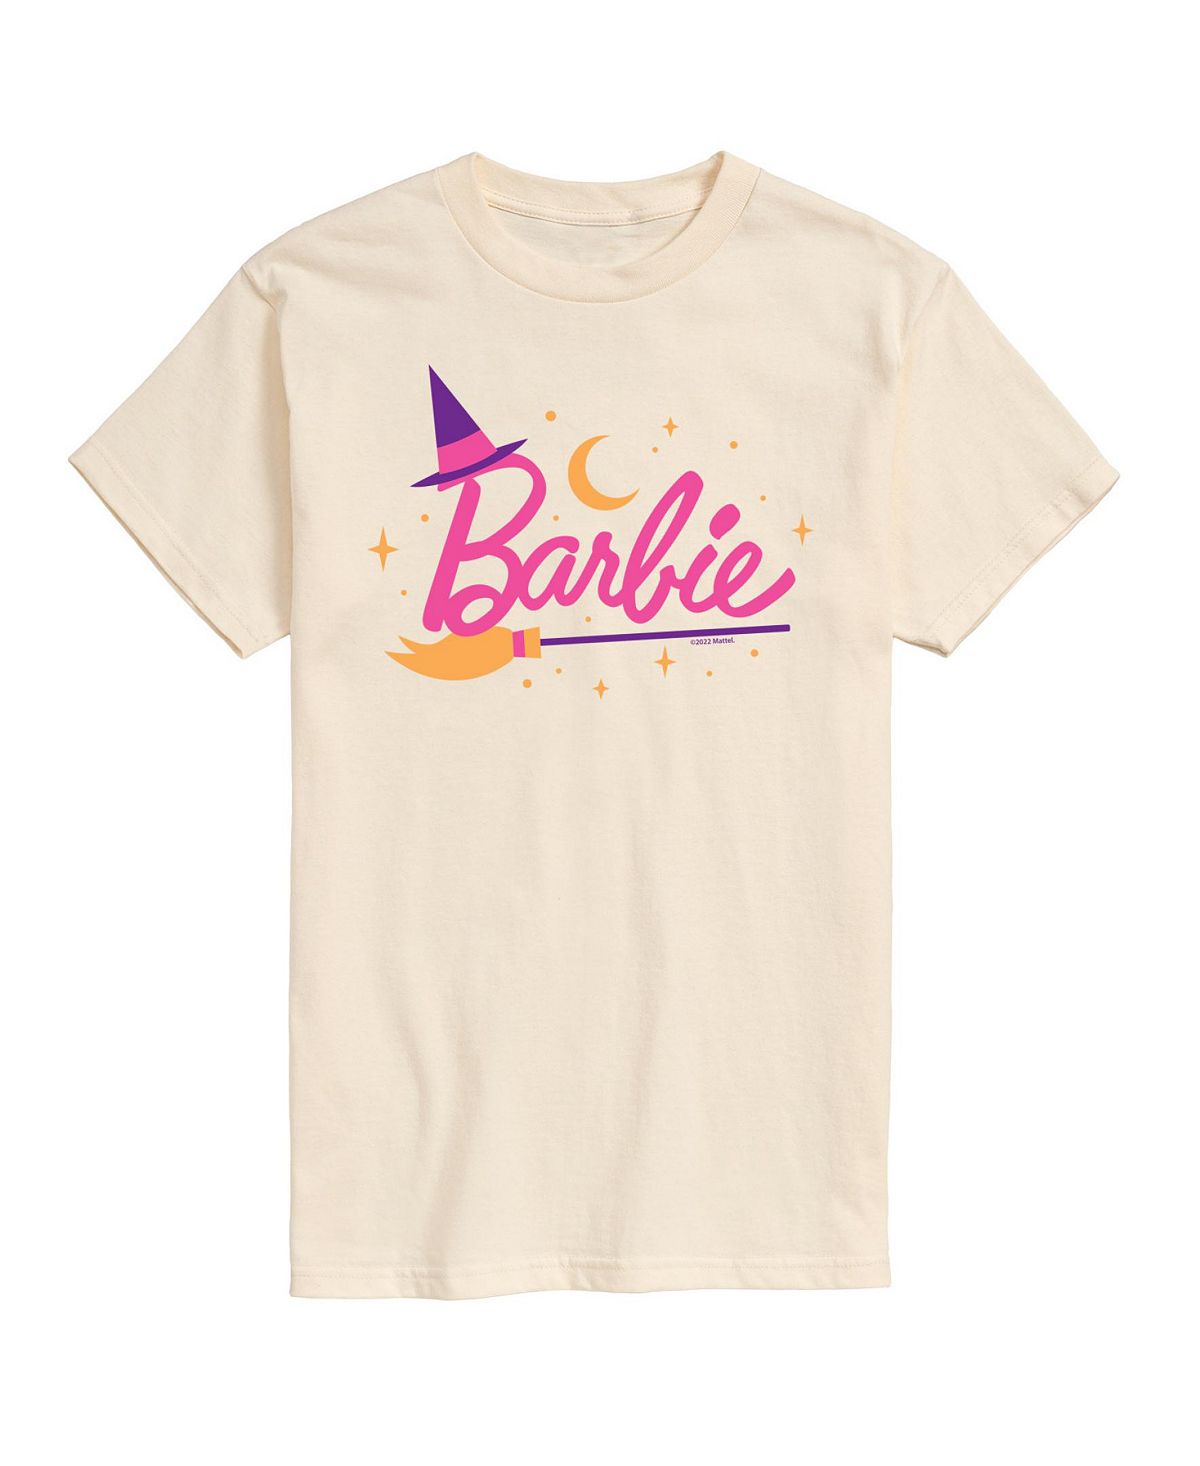 Мужская футболка с коротким рукавом «Барби» AIRWAVES мужская многозадачная футболка с коротким рукавом airwaves серый